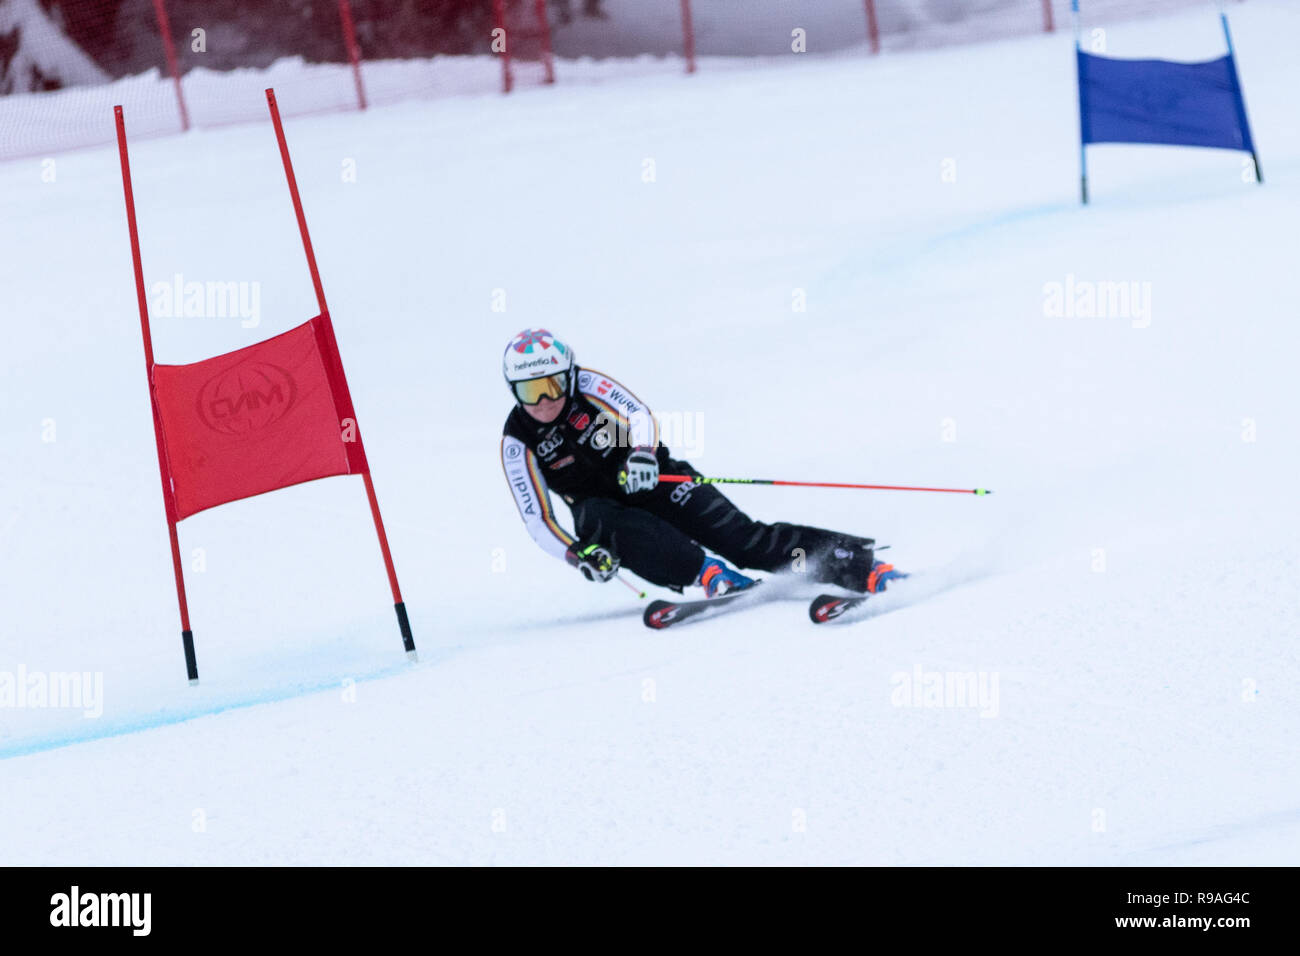 Courchevel, Rhone Alpes, France, 21st December 2018, Viktoria Rebensburg of Germany 2nd place in Ladies Giant Slalom Audi FIS Alpine Ski World Cup 2019 Stock Photo